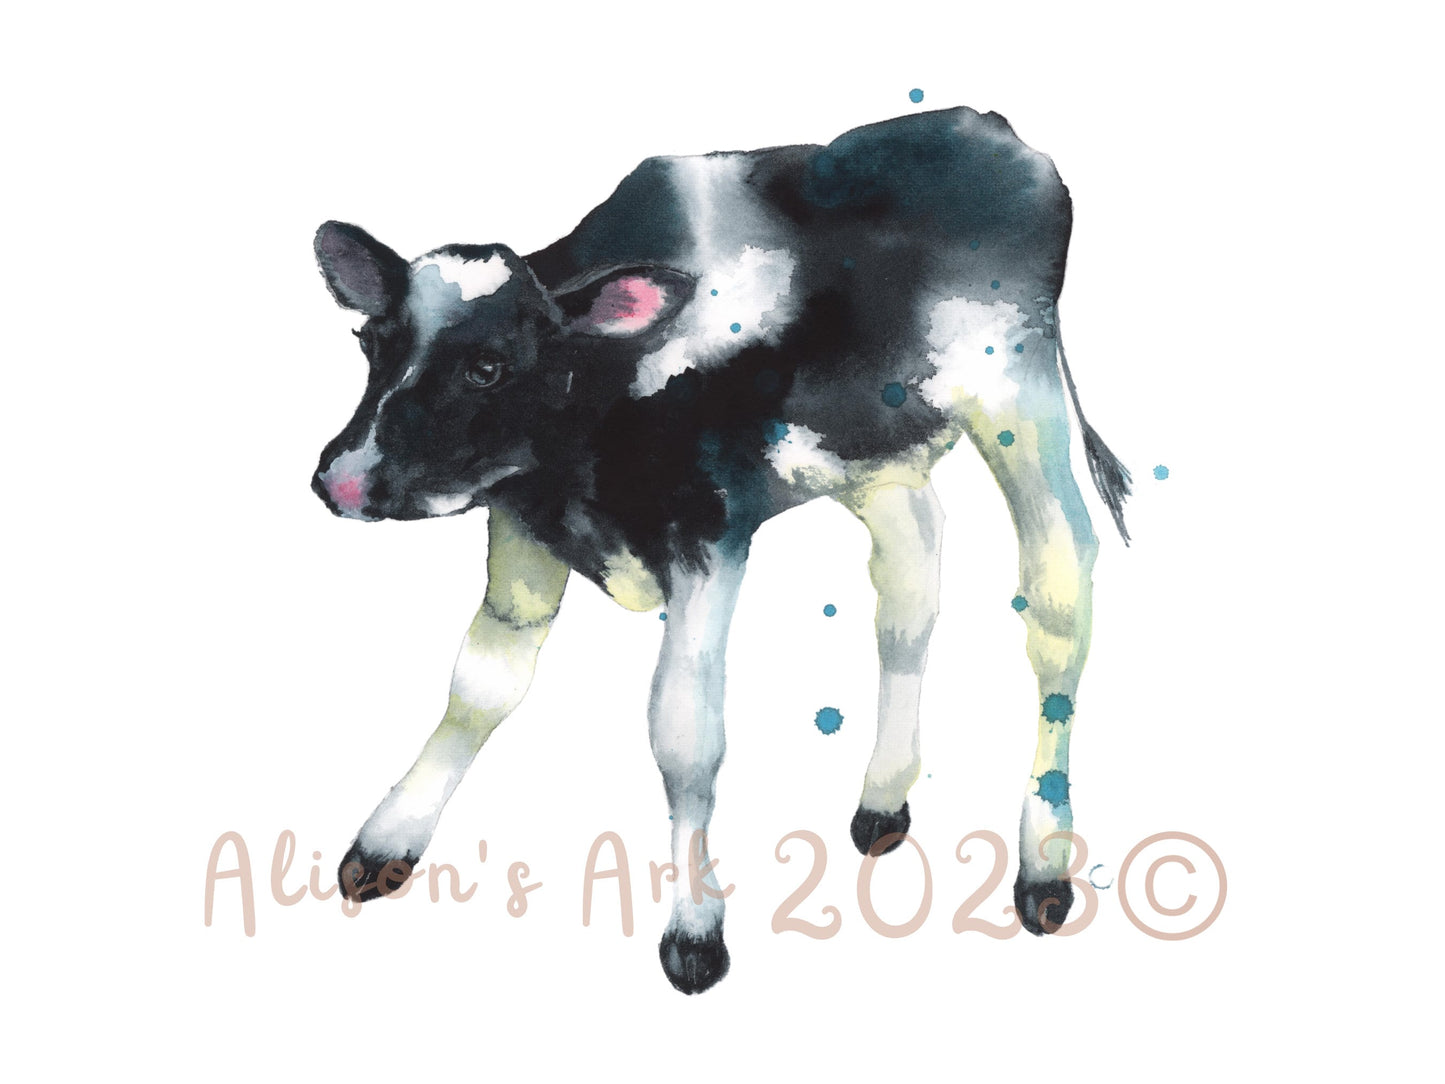 Curious Calf - giclee watercolour calf print - UK made